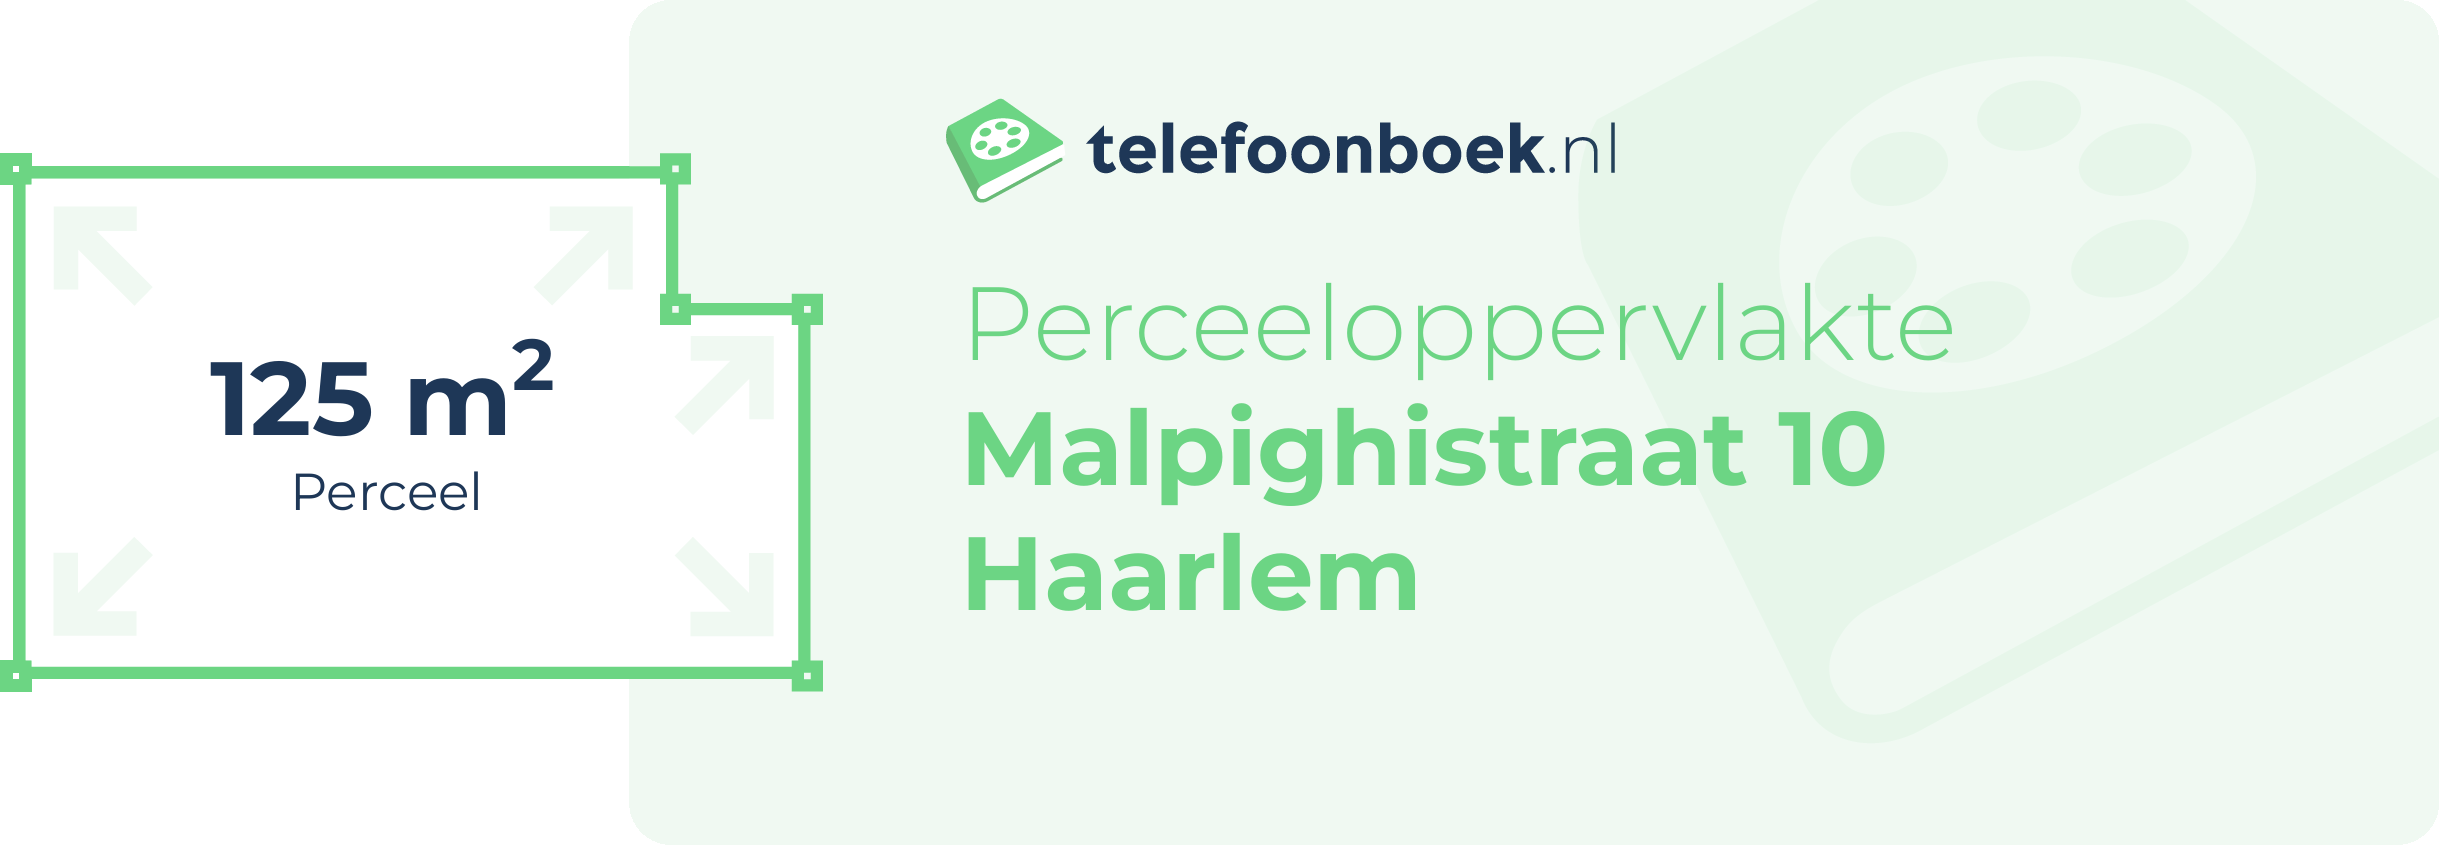 Perceeloppervlakte Malpighistraat 10 Haarlem